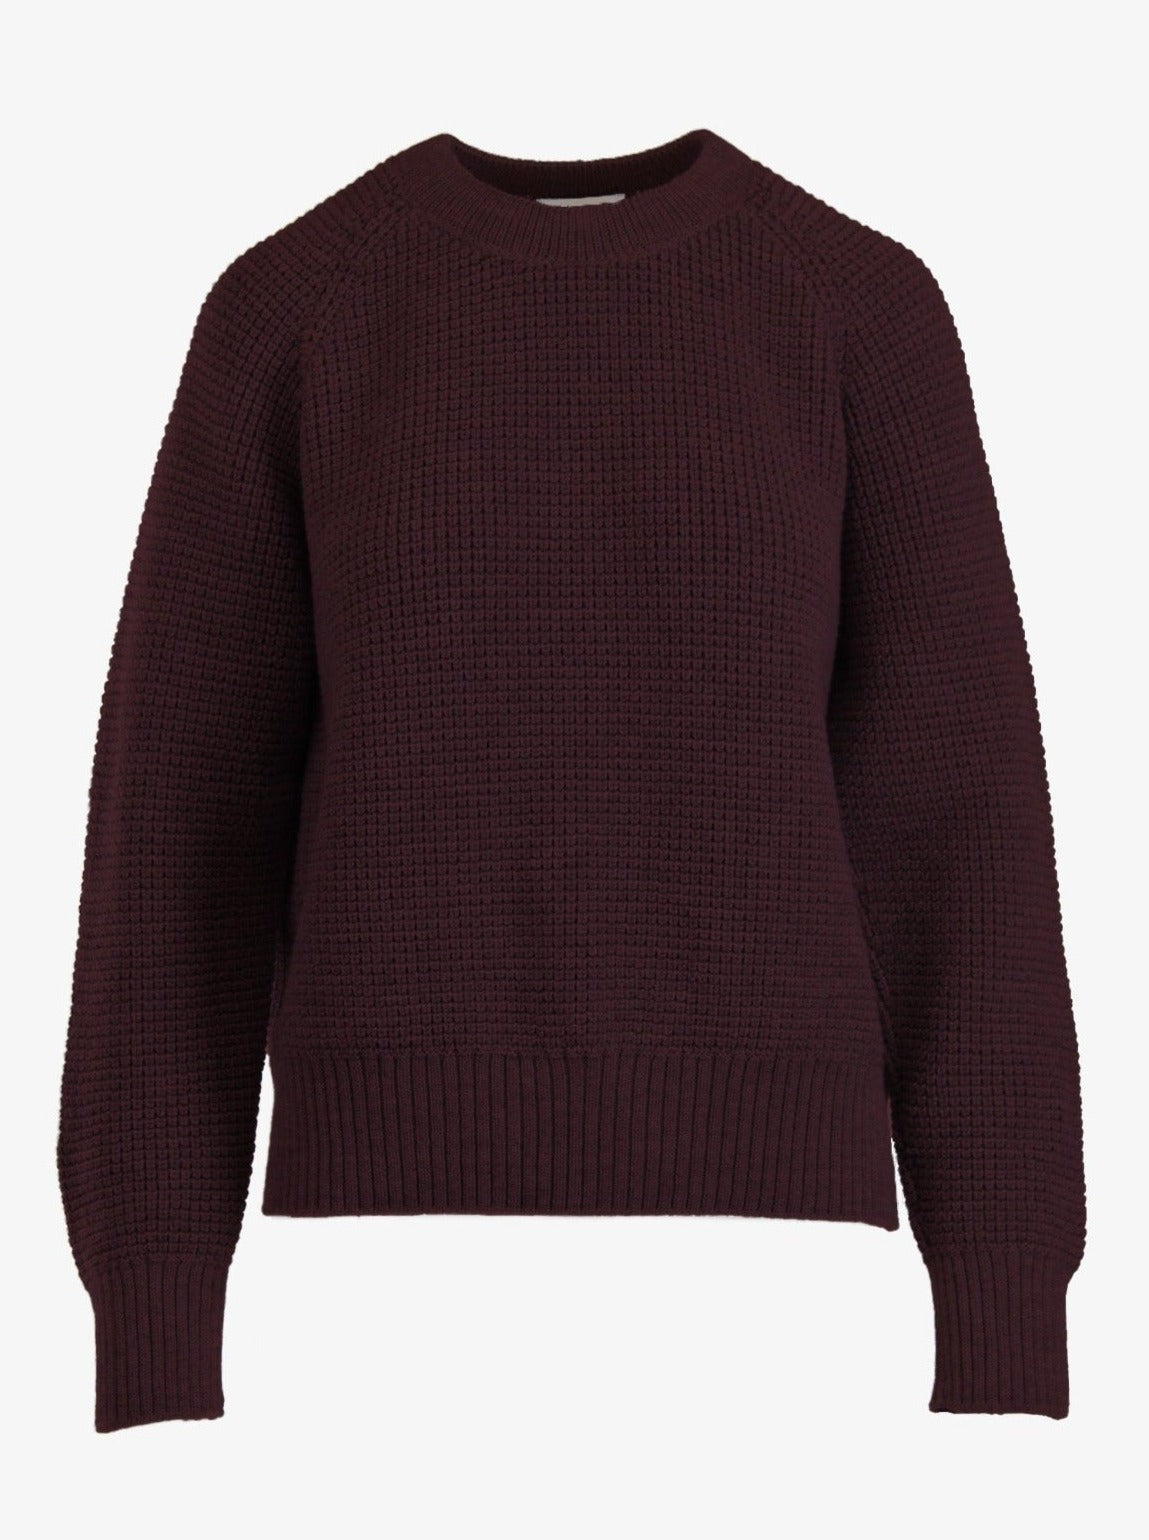 finley beet merino wool pullover 3D knit sweater